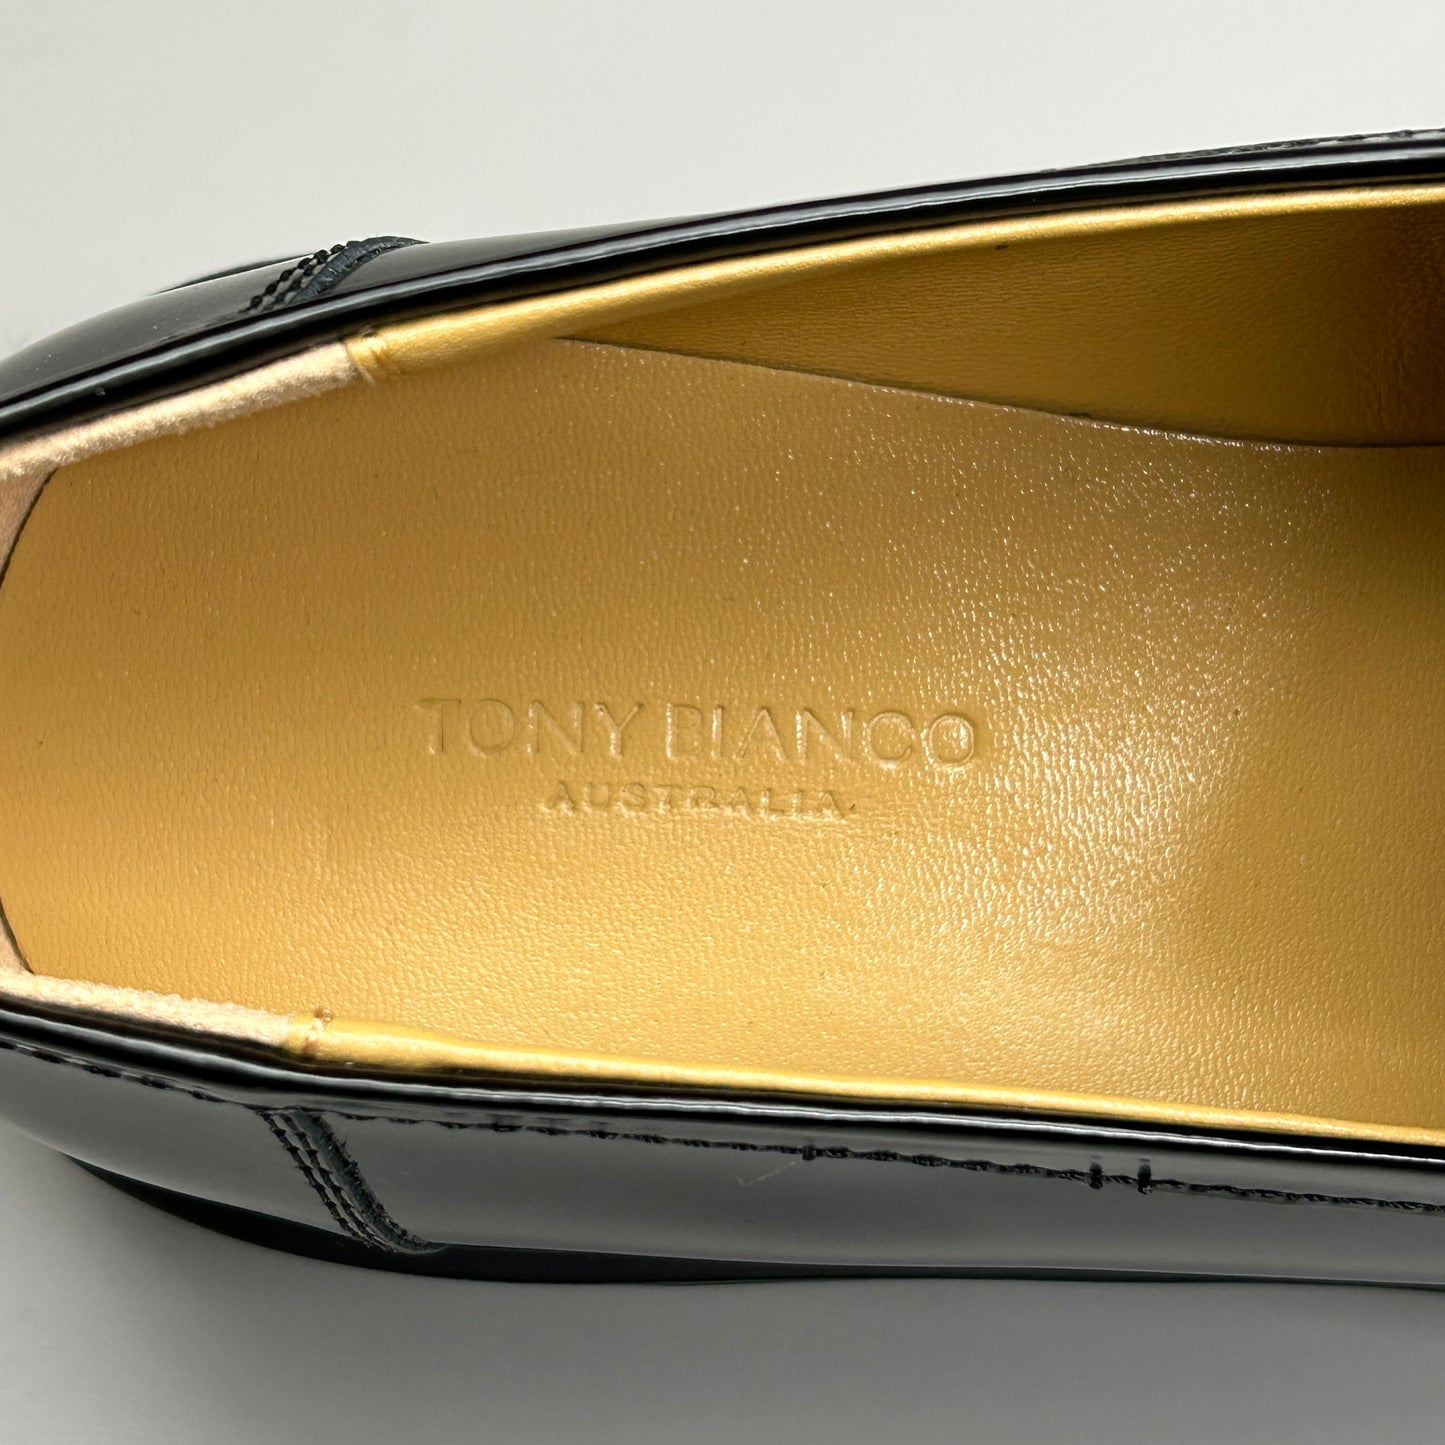 TONY BIANCO Wiz Black Hi Shine Casual Shoes Women's Sz 7.5 (New)